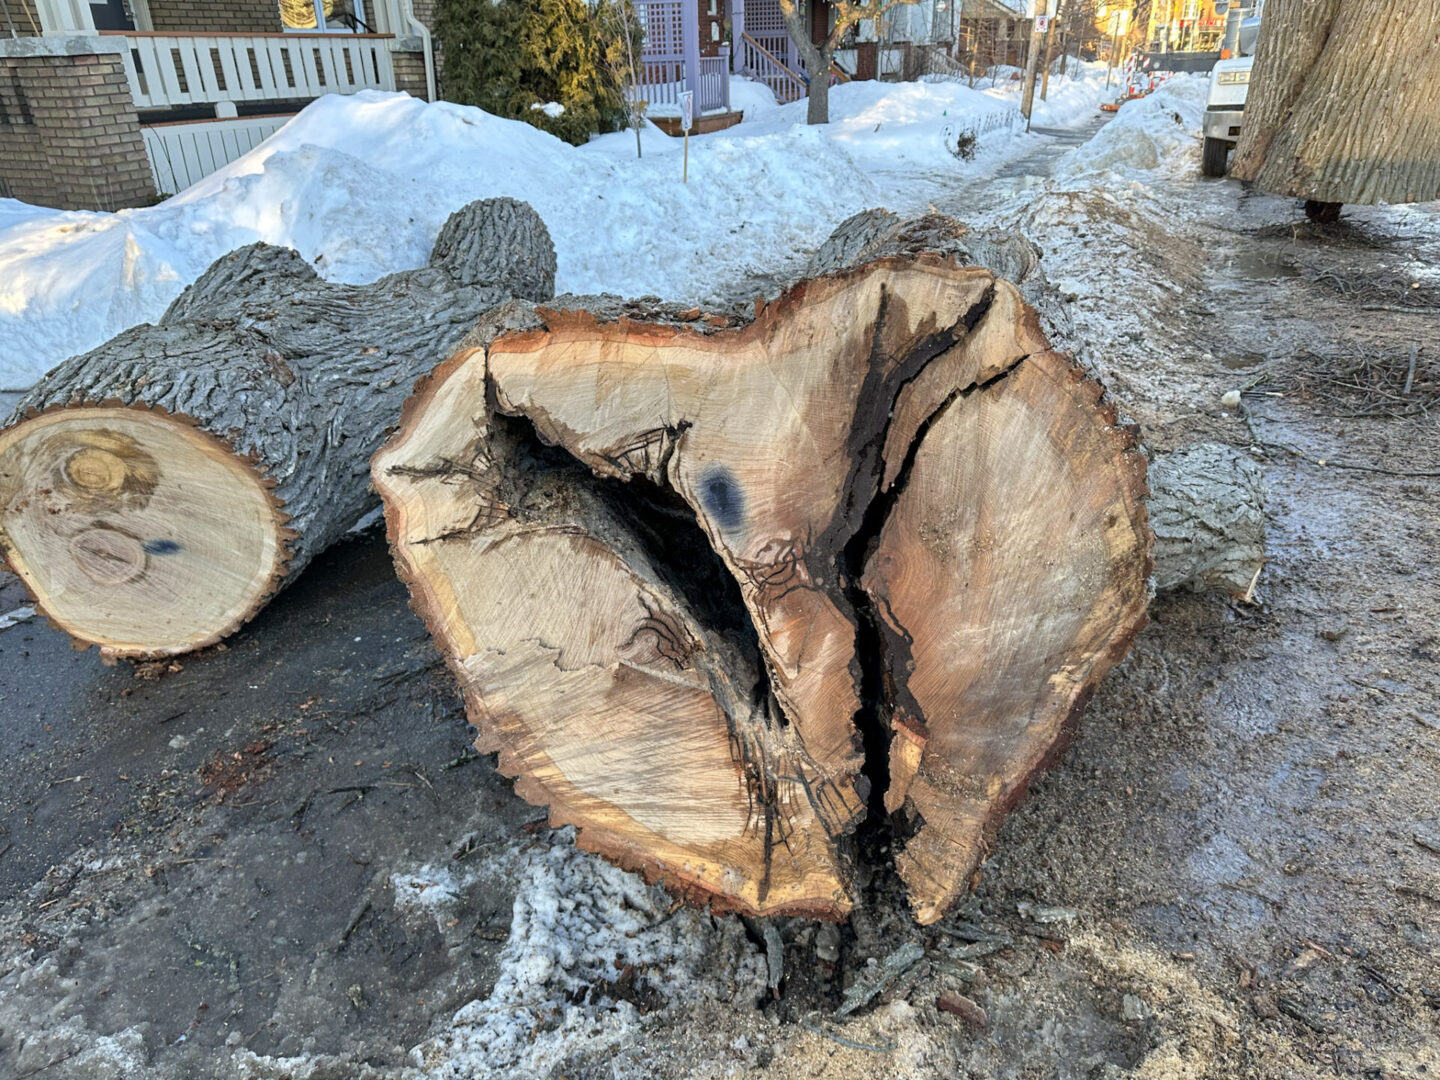 Chopped tree trunks